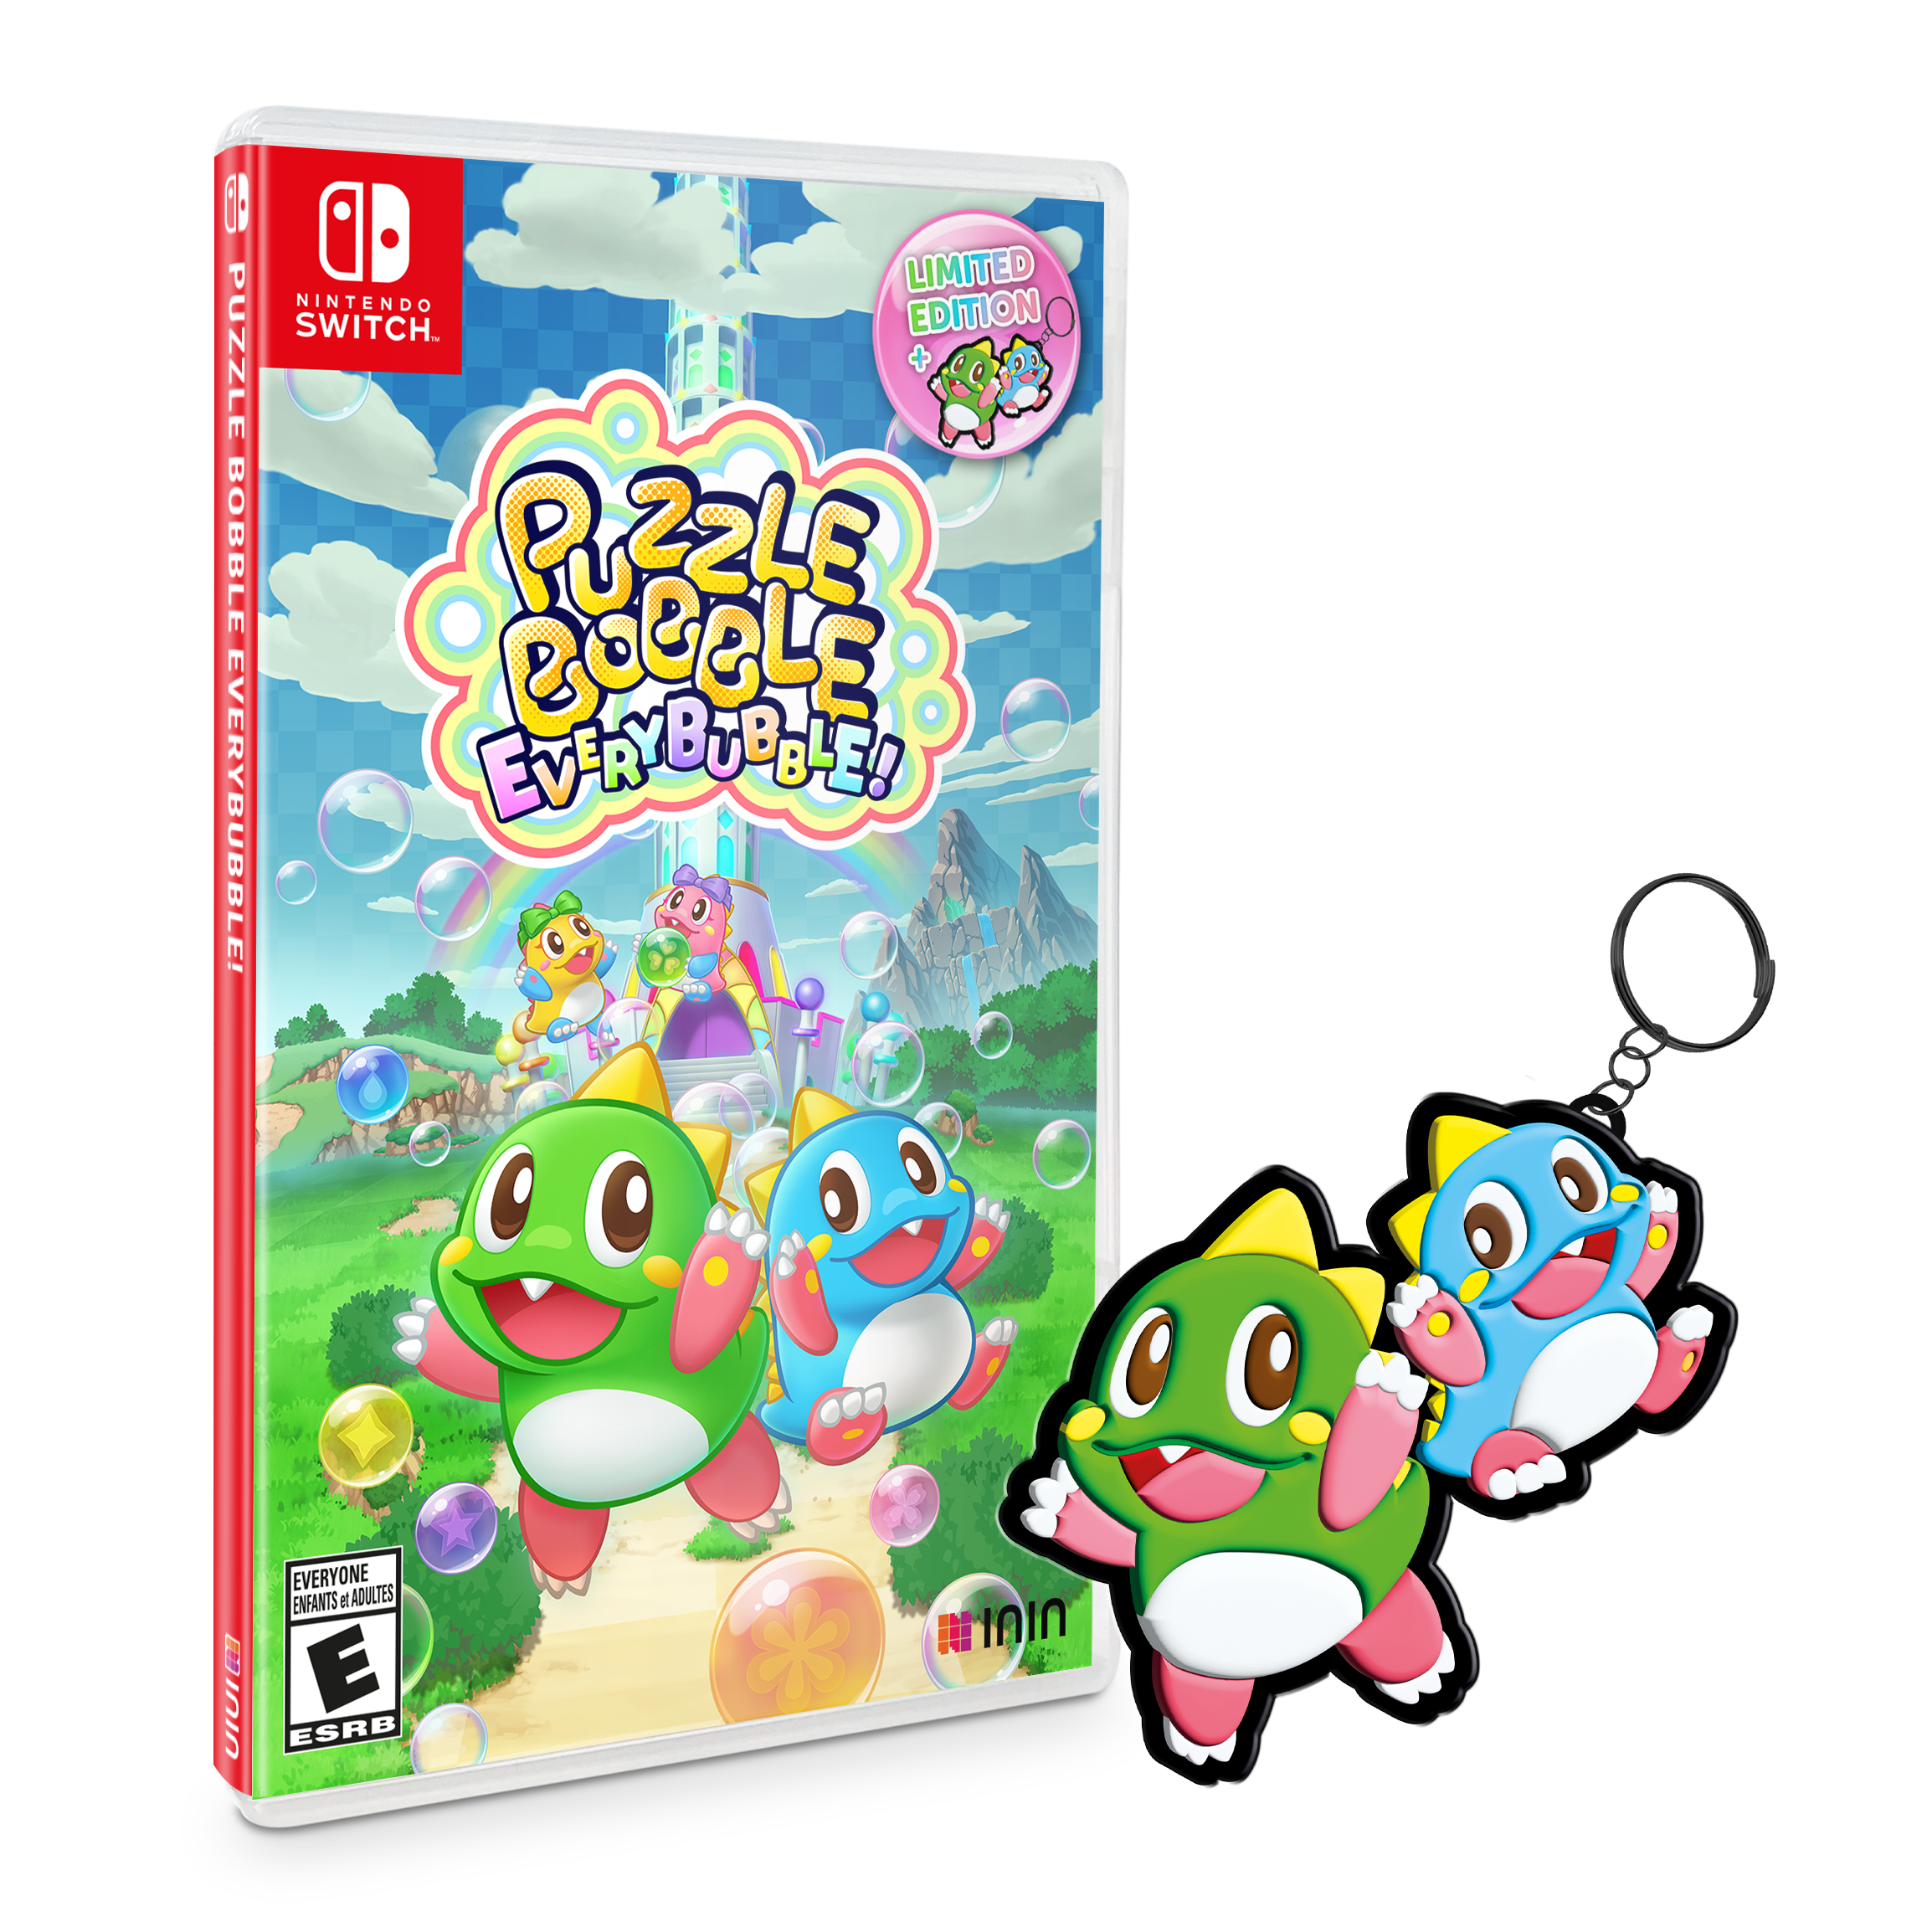 Puzzle Bobble Everybubble! - Nintendo Switch Limited